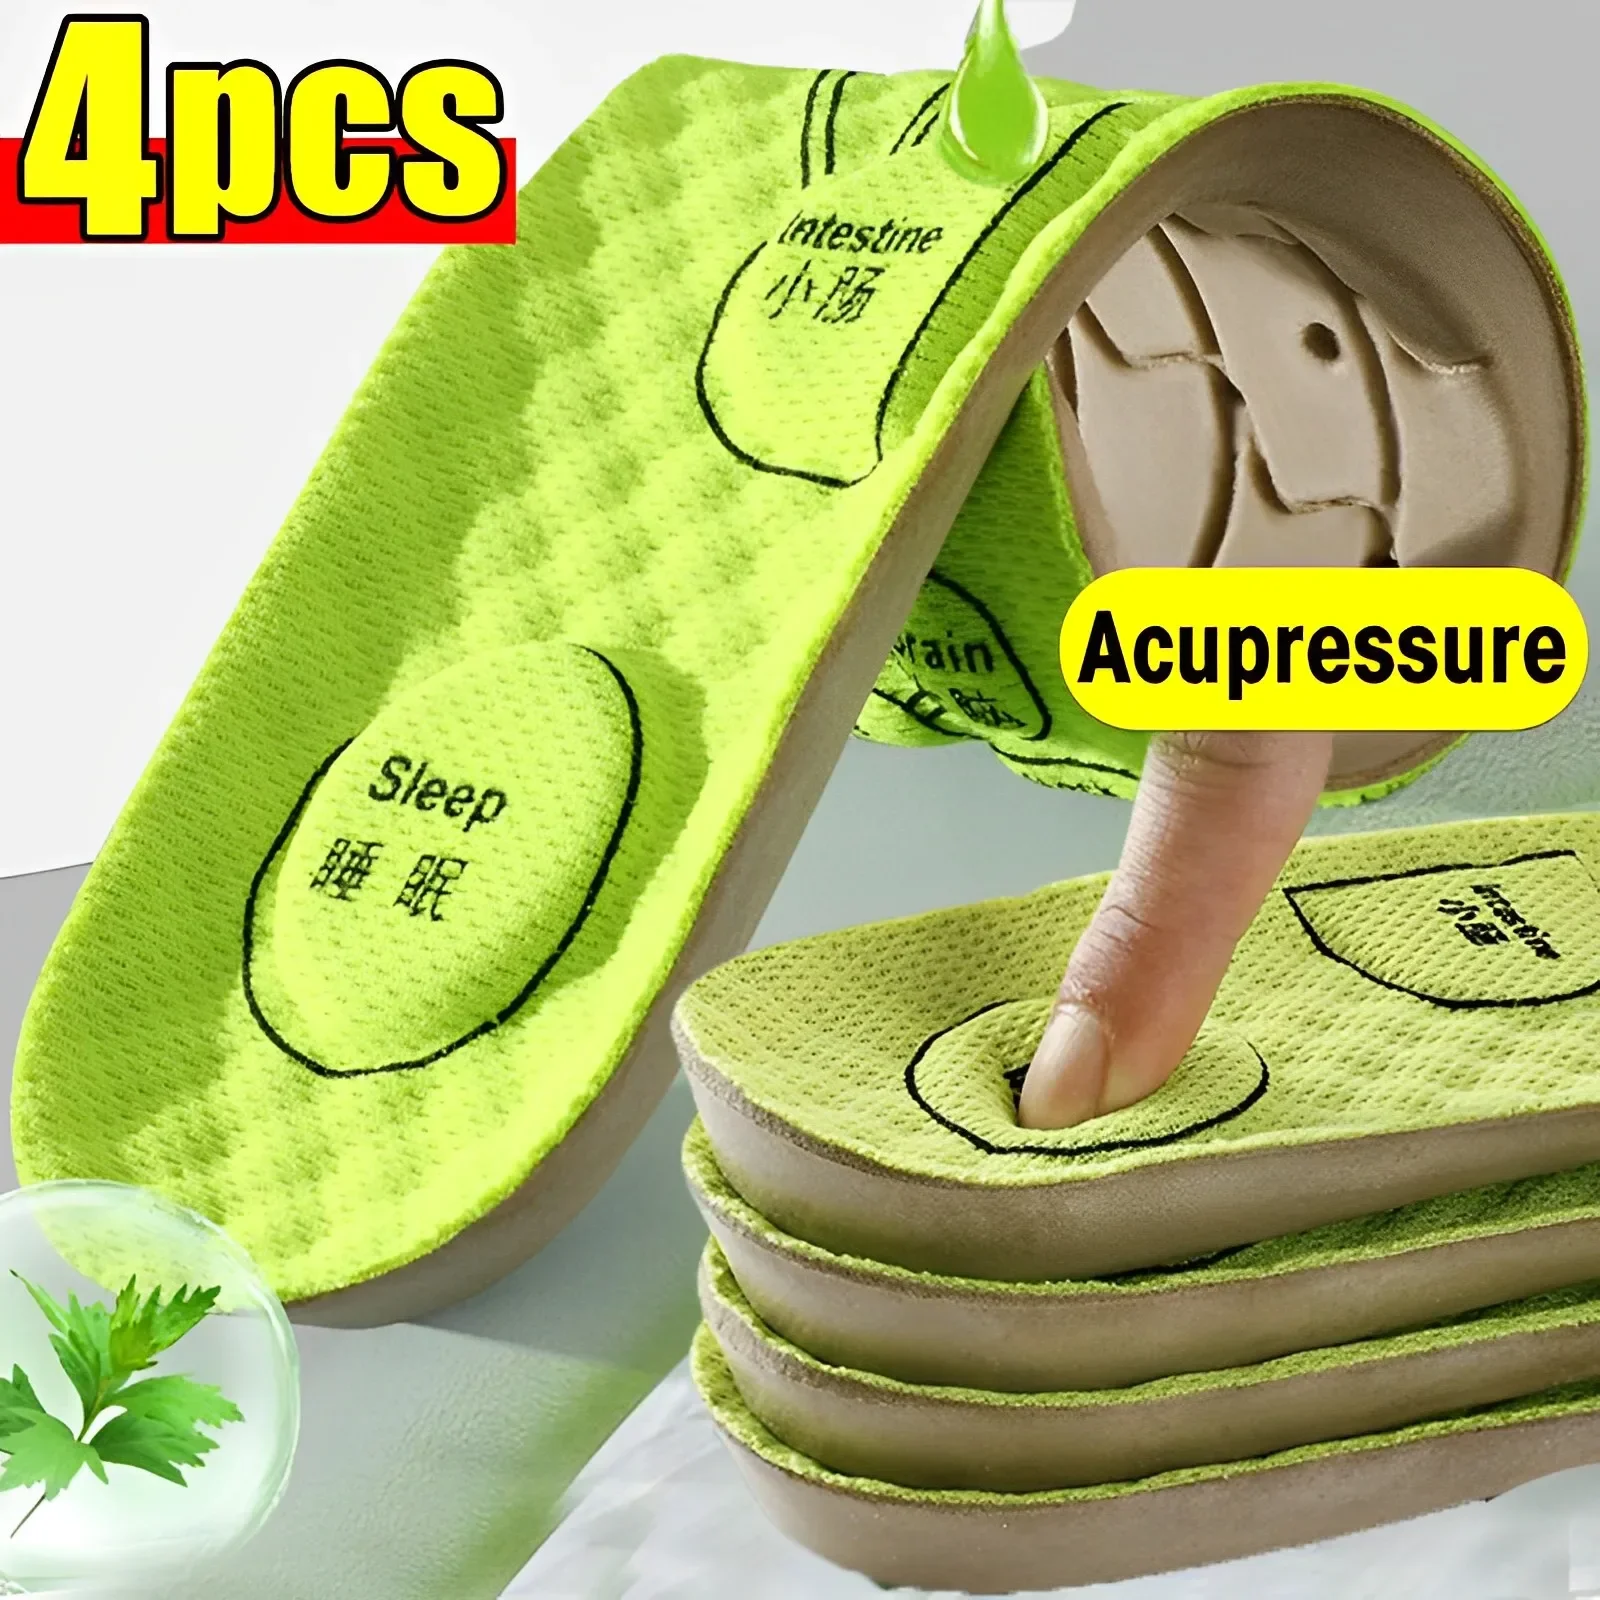 

4PCS Foot Acupressure Insole Men Women Soft Breathable Sports Cushion Inserts Sweat-absorbing Deodorant Orthopedic Shoe Sole